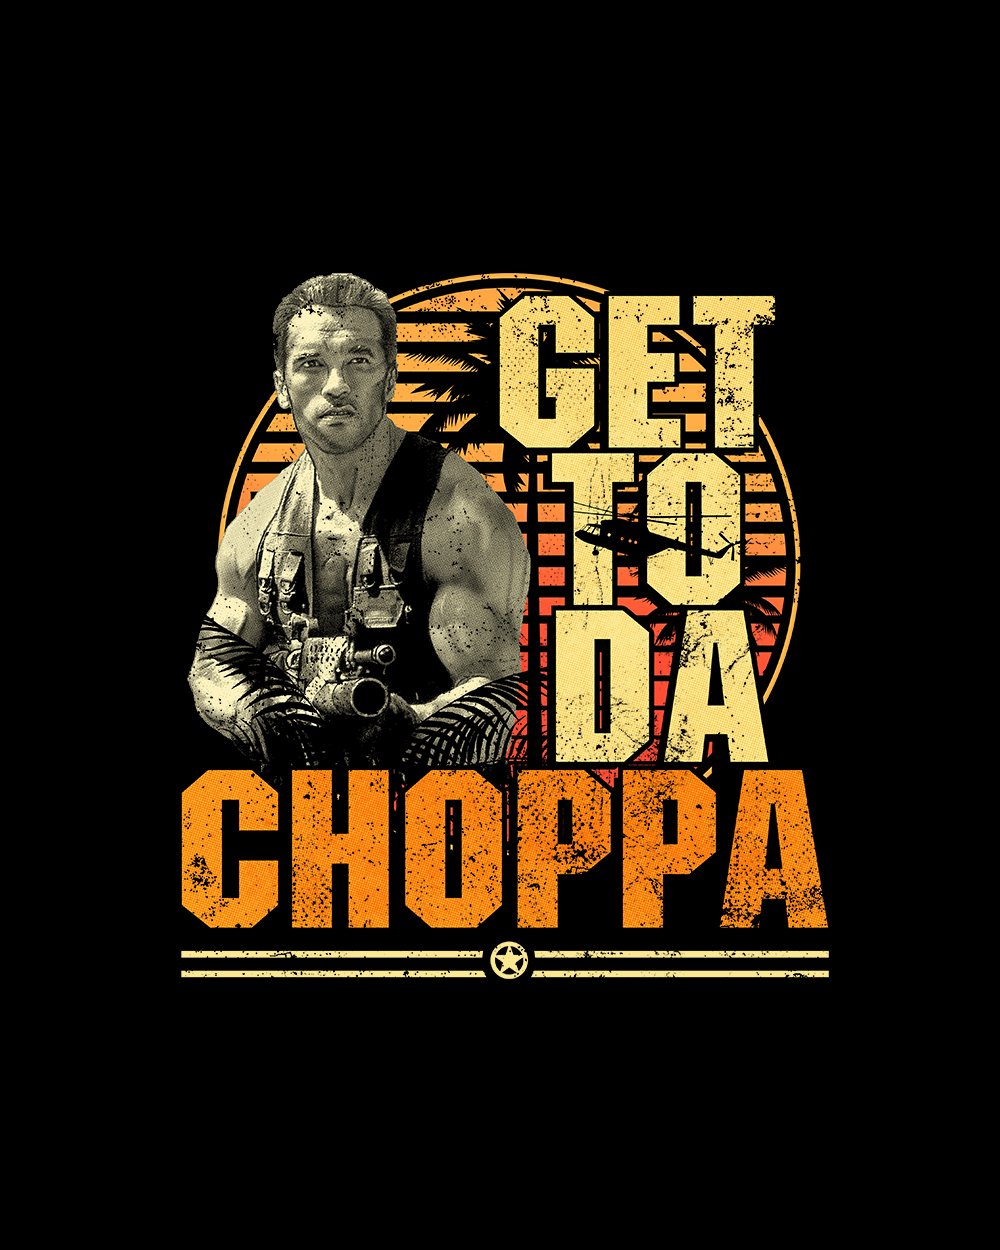 Get to Da Choppa Tank Australia Online #colour_black